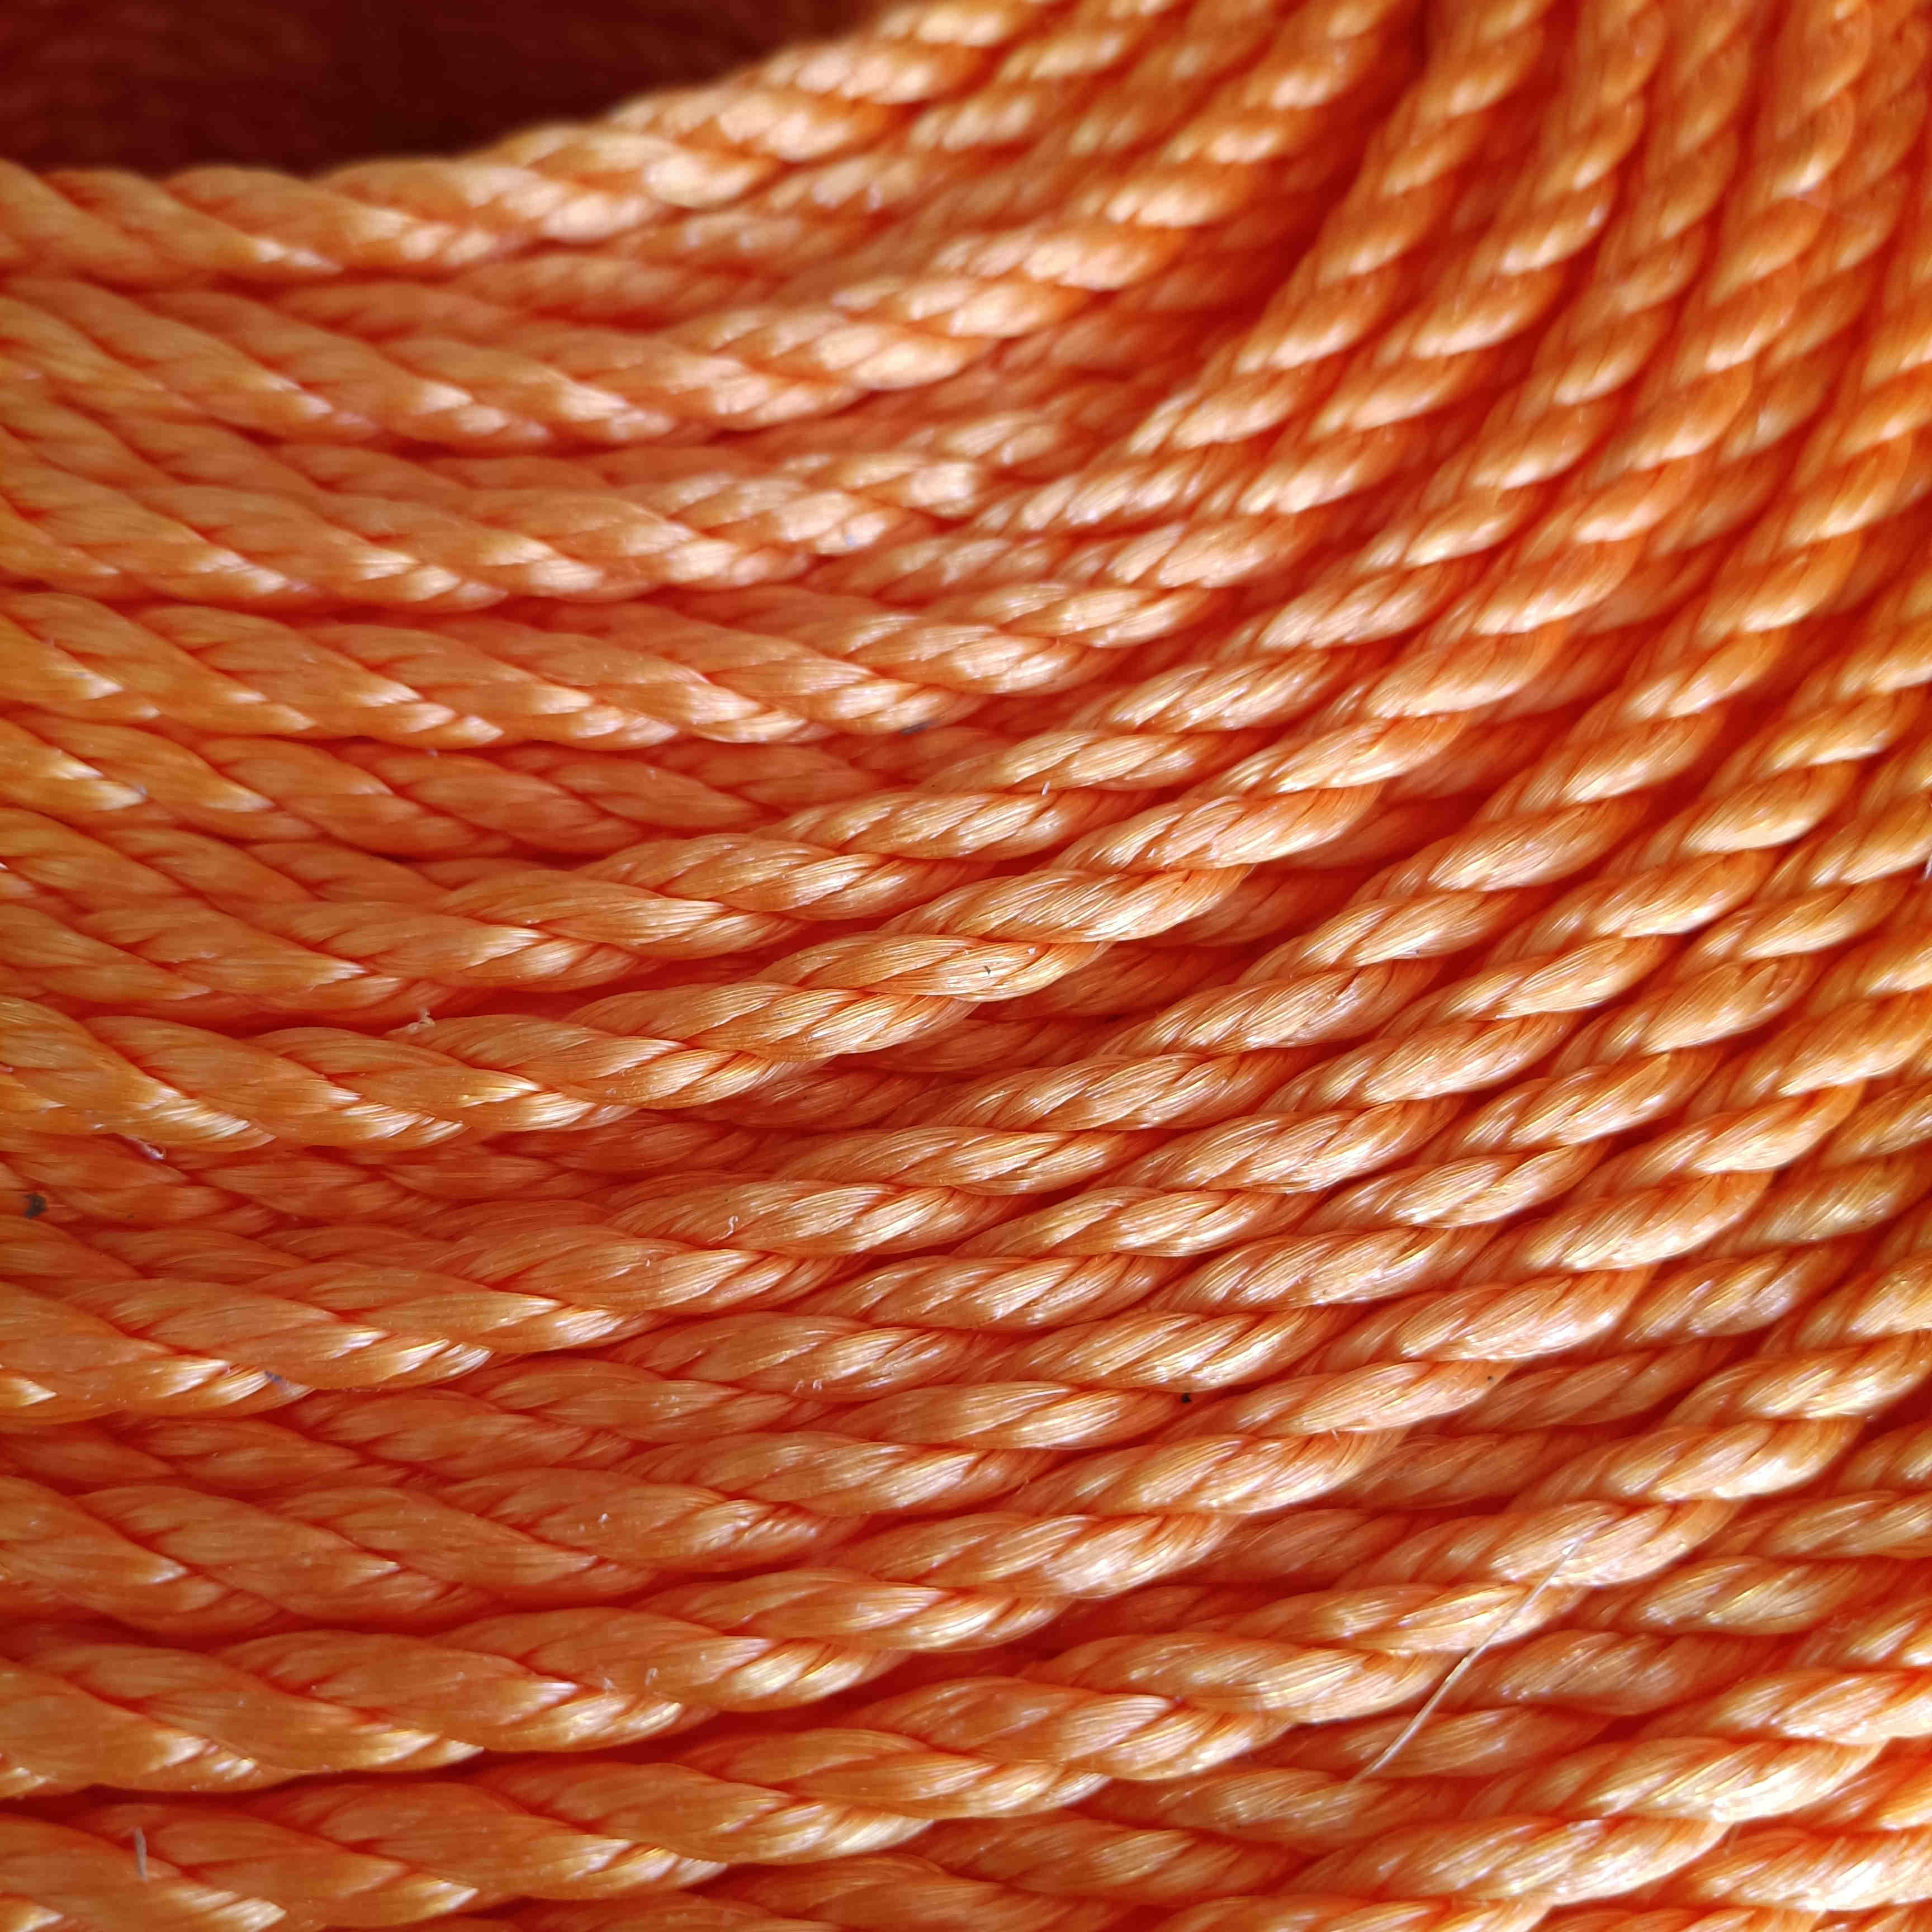 12mm橙色聚乙烯绳（220m线圈）